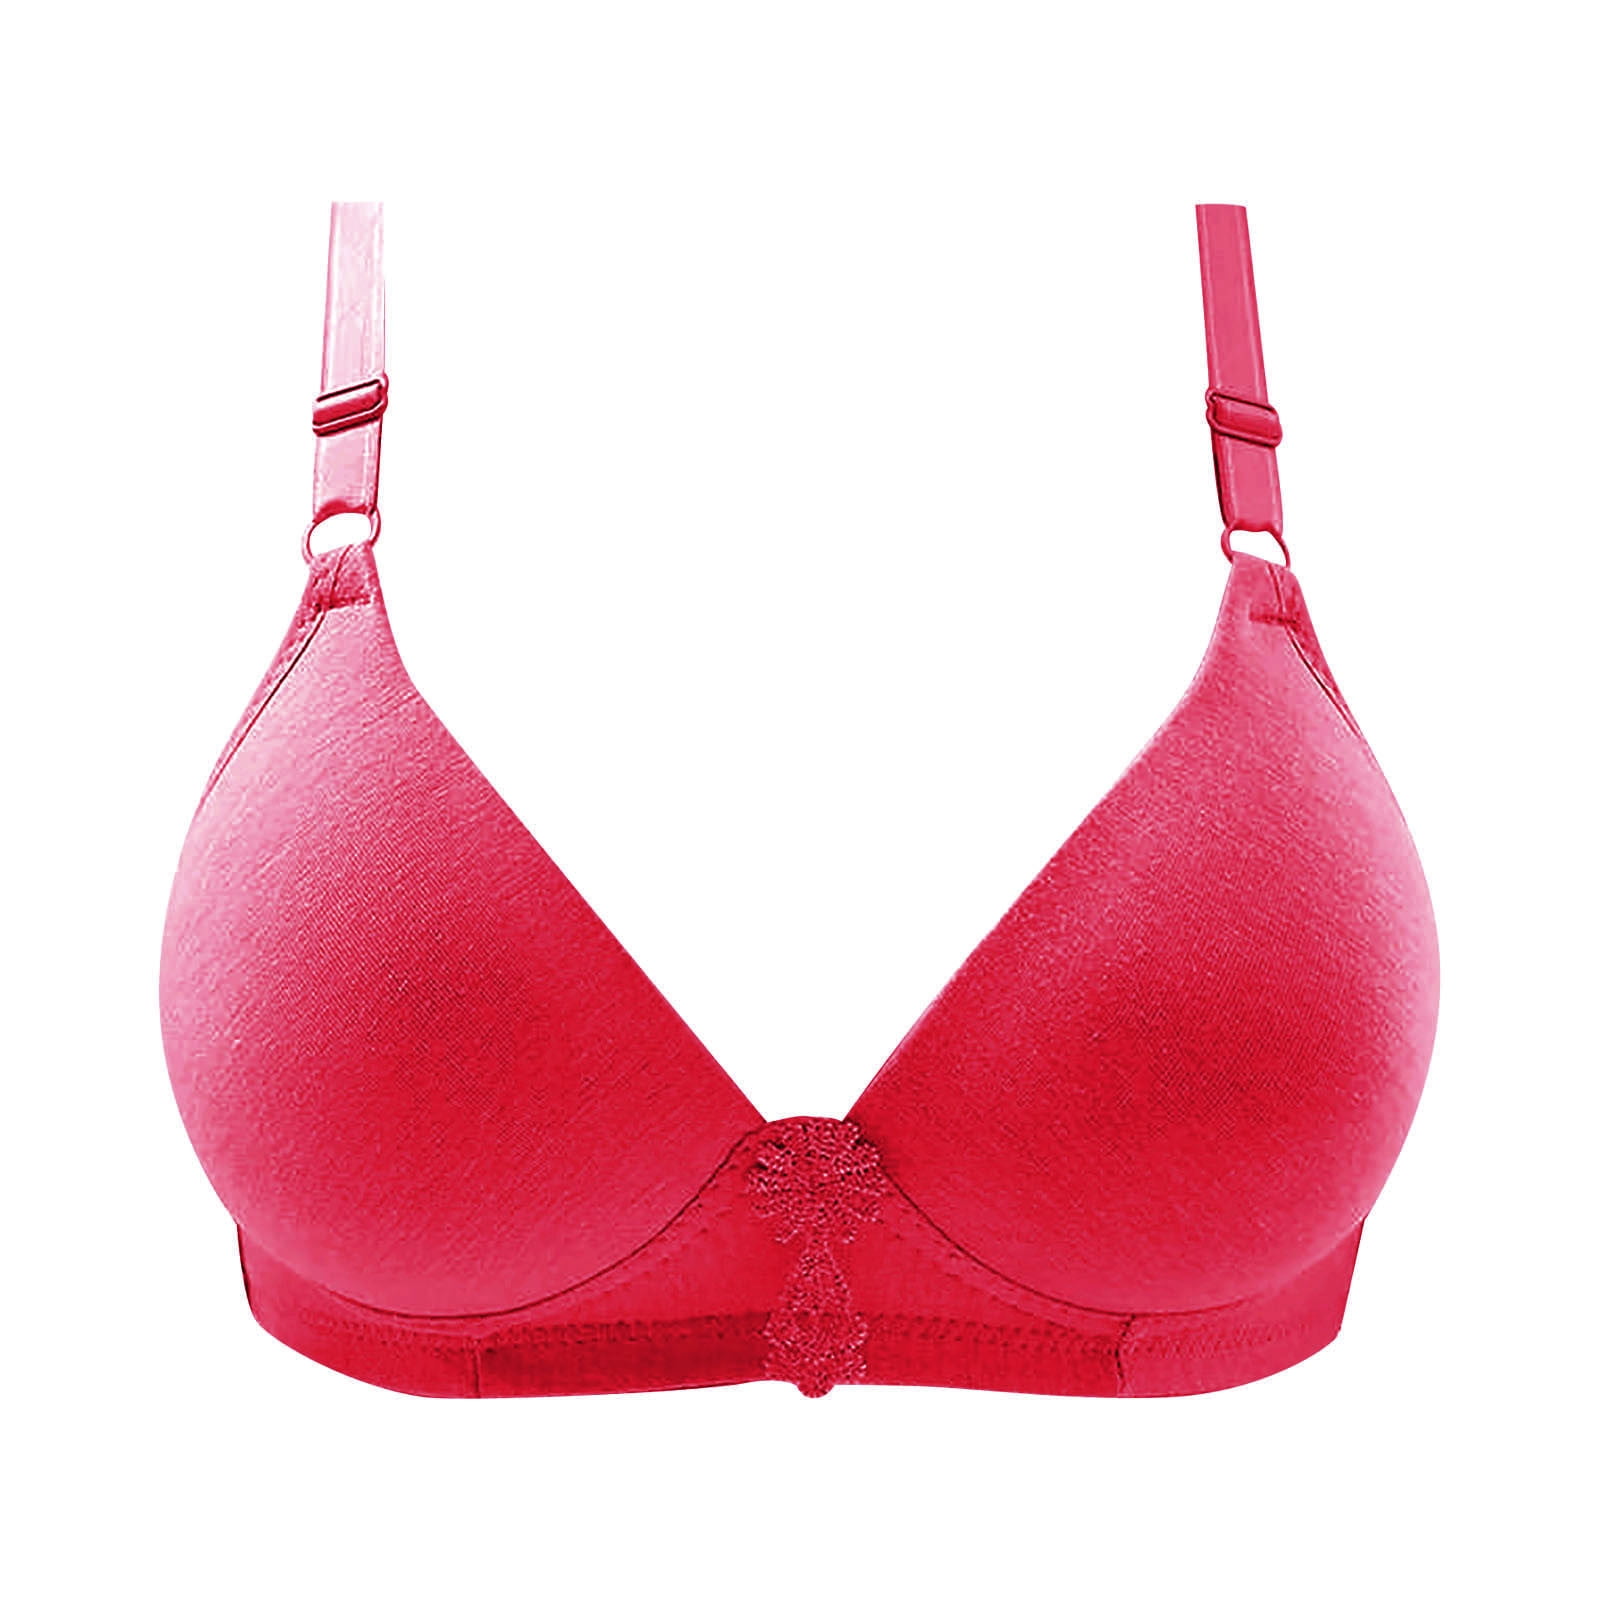 Bigersell Women's+sports+bras Sale Full Support Bras Women High